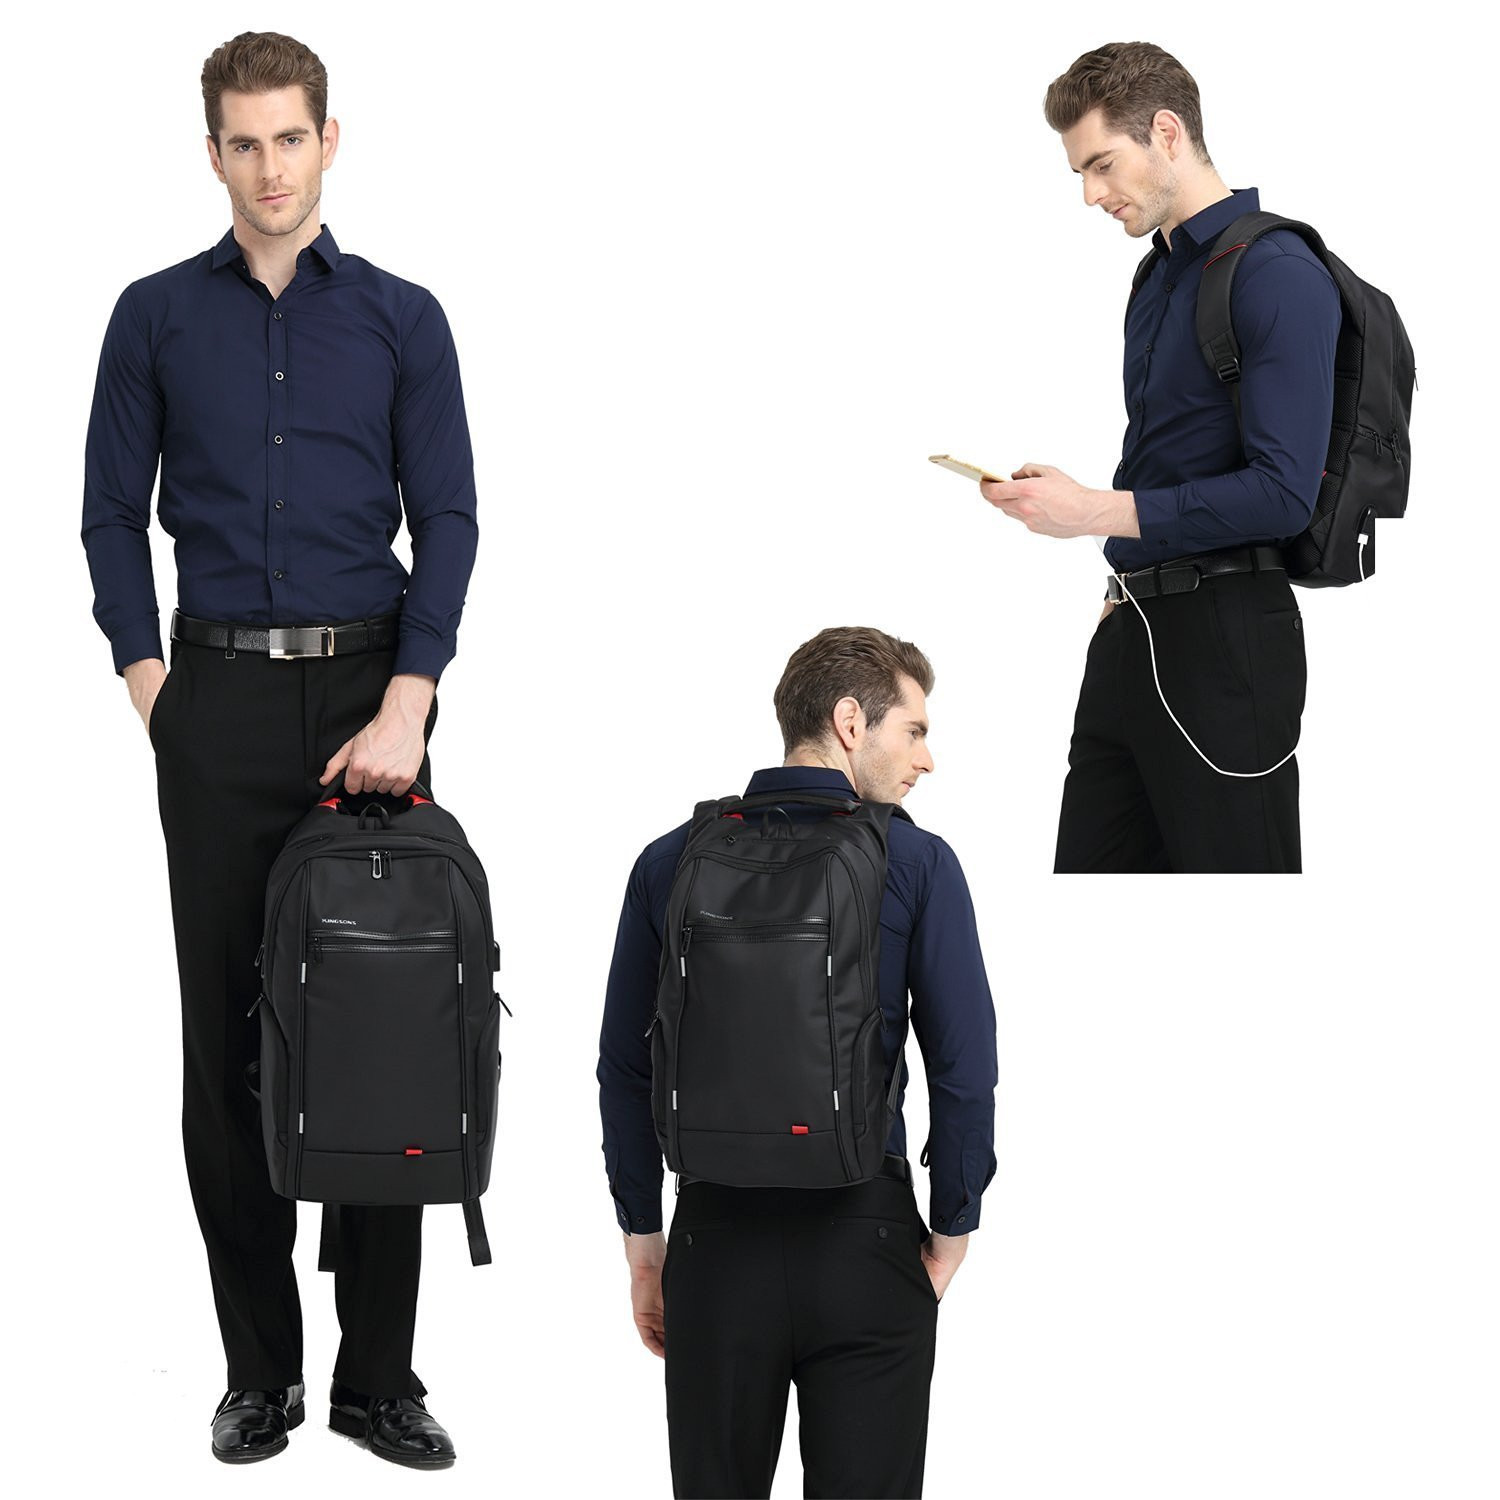 Kingsons Advanced Professional Backpack